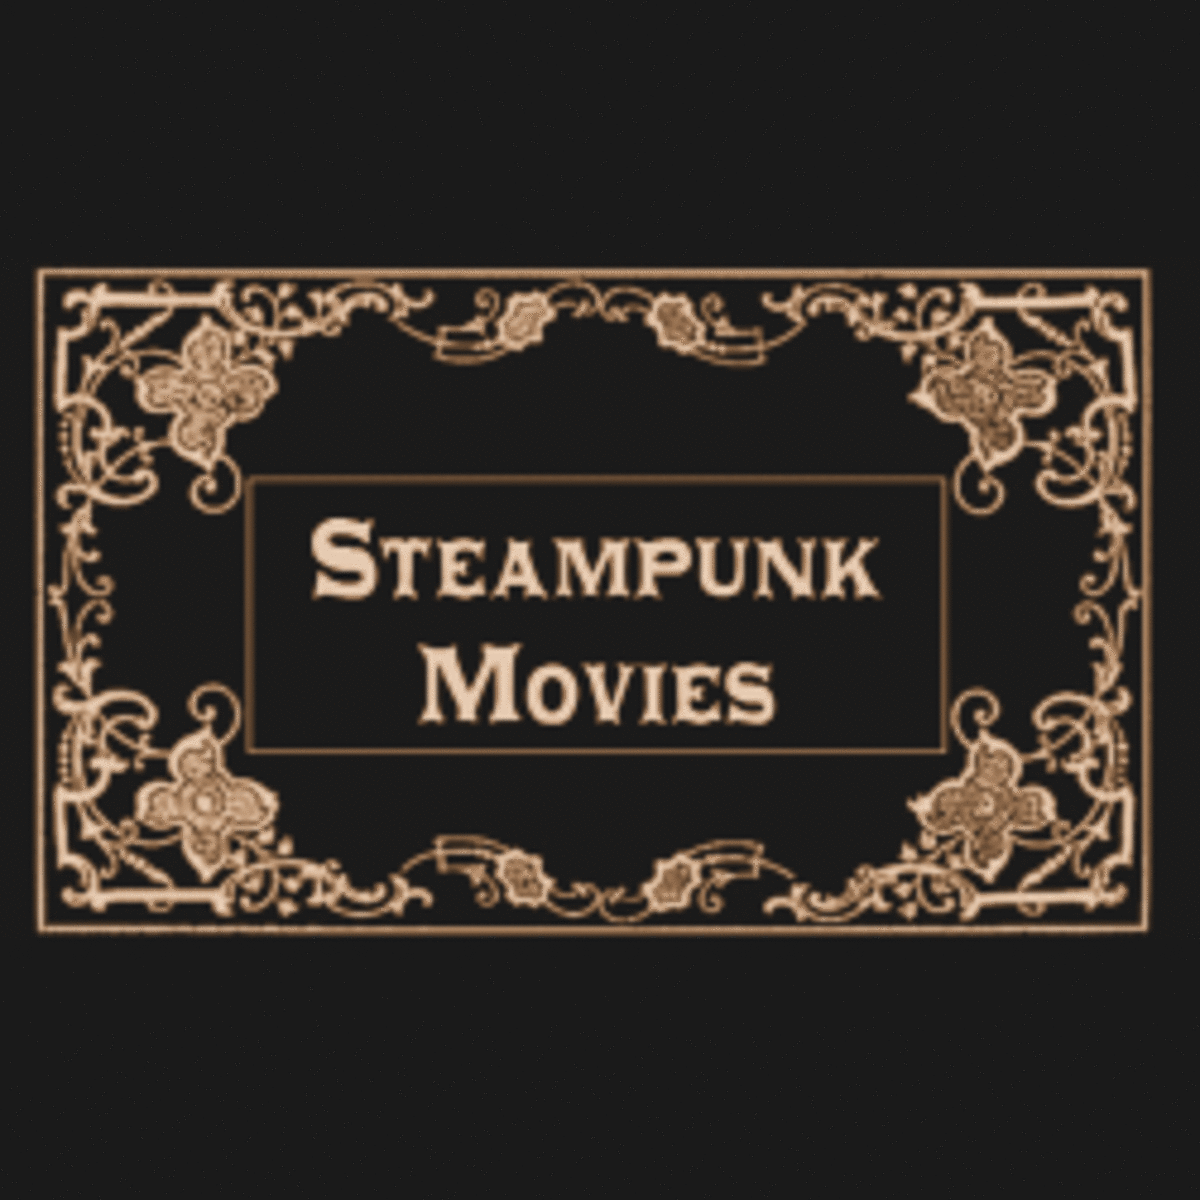 Steampunk Movies